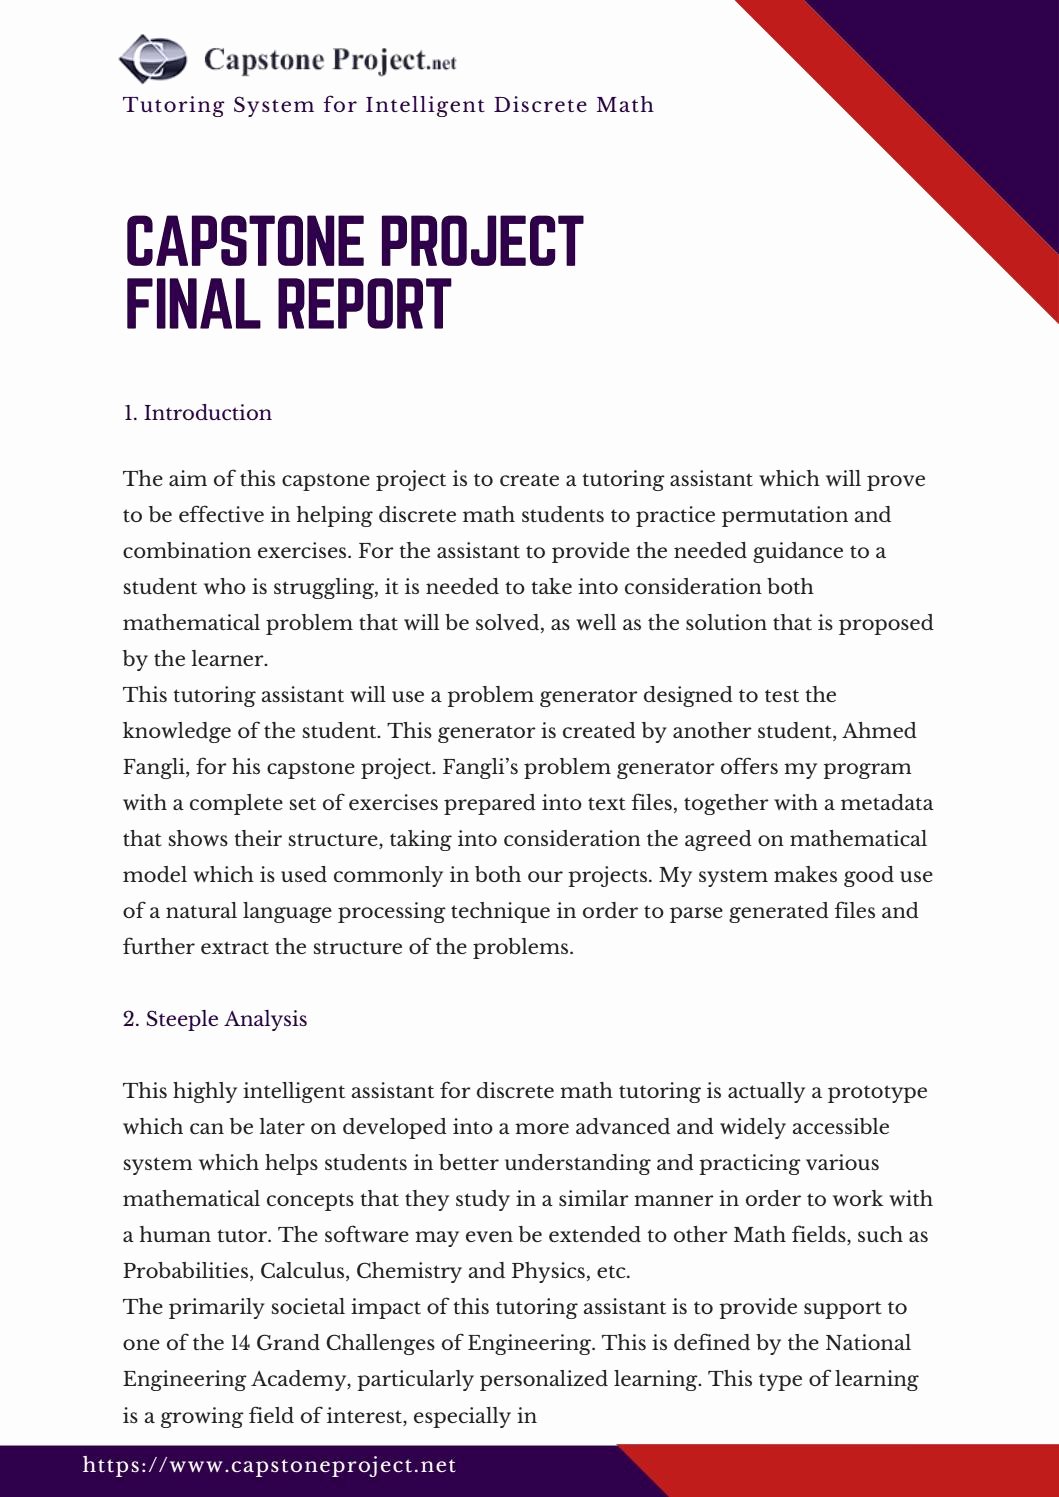 Final Project Report Sample Beautiful Capstone Project Final Report Sample by Capstoneproject